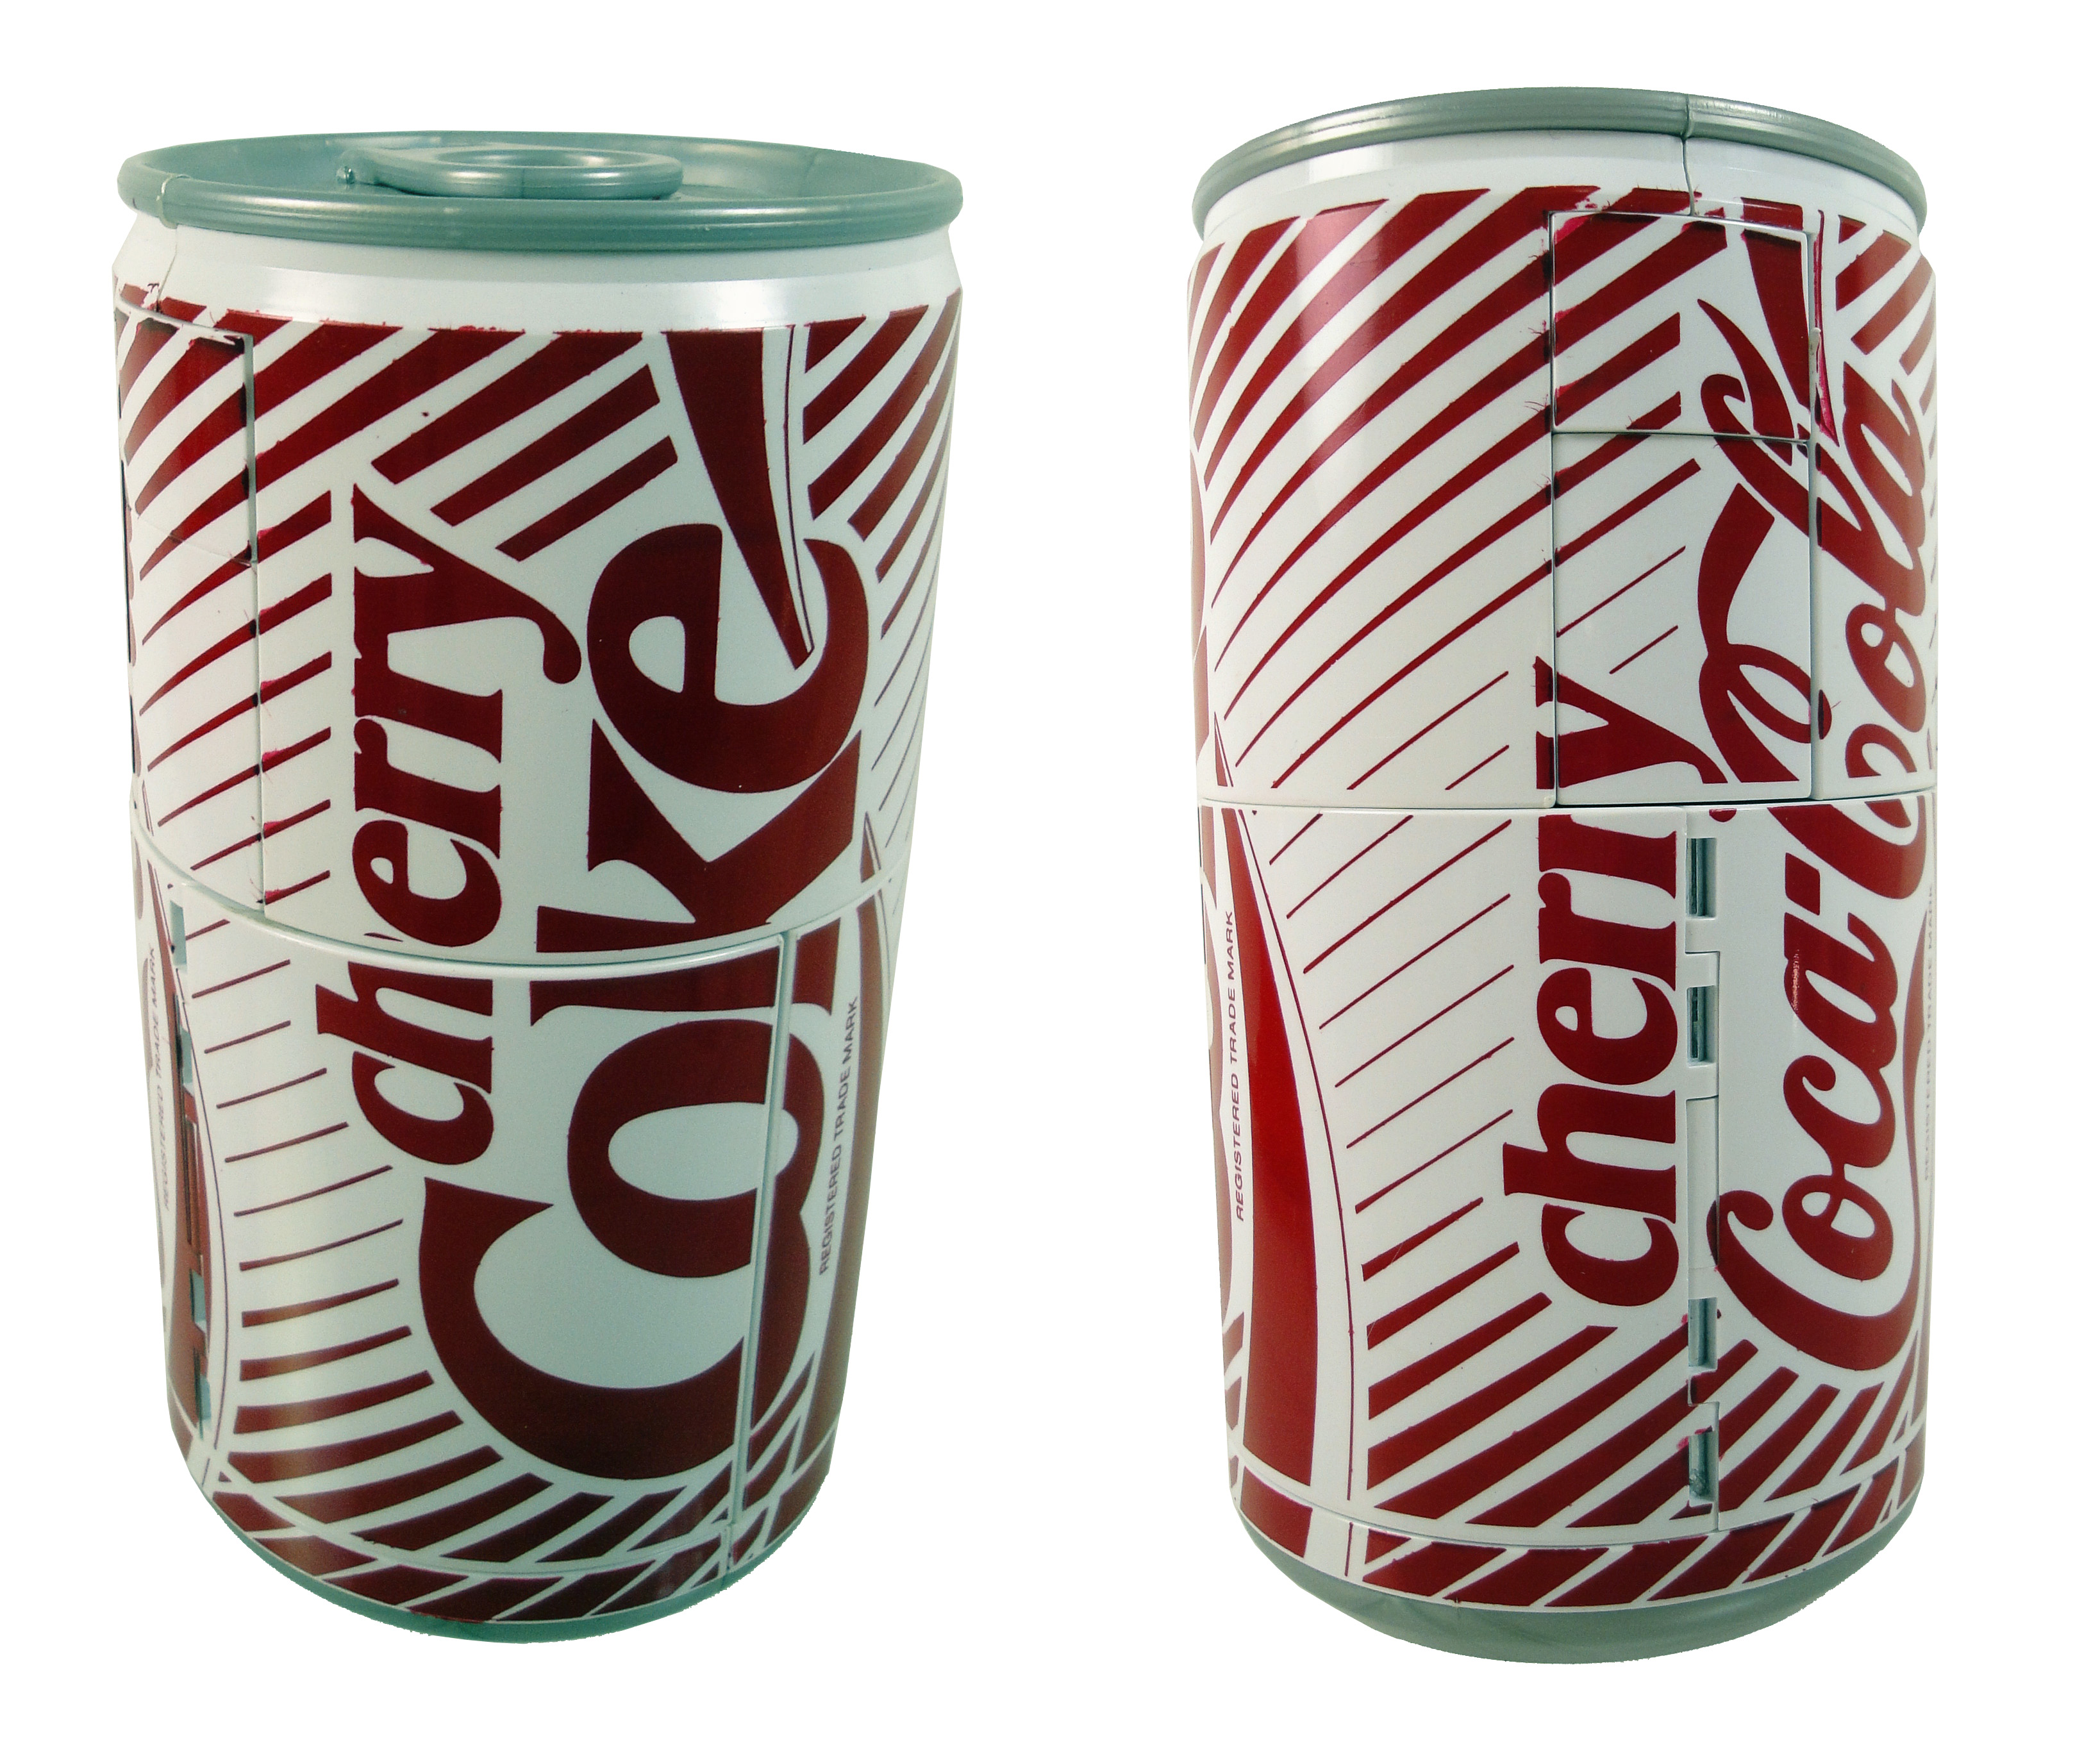 gobot coke can